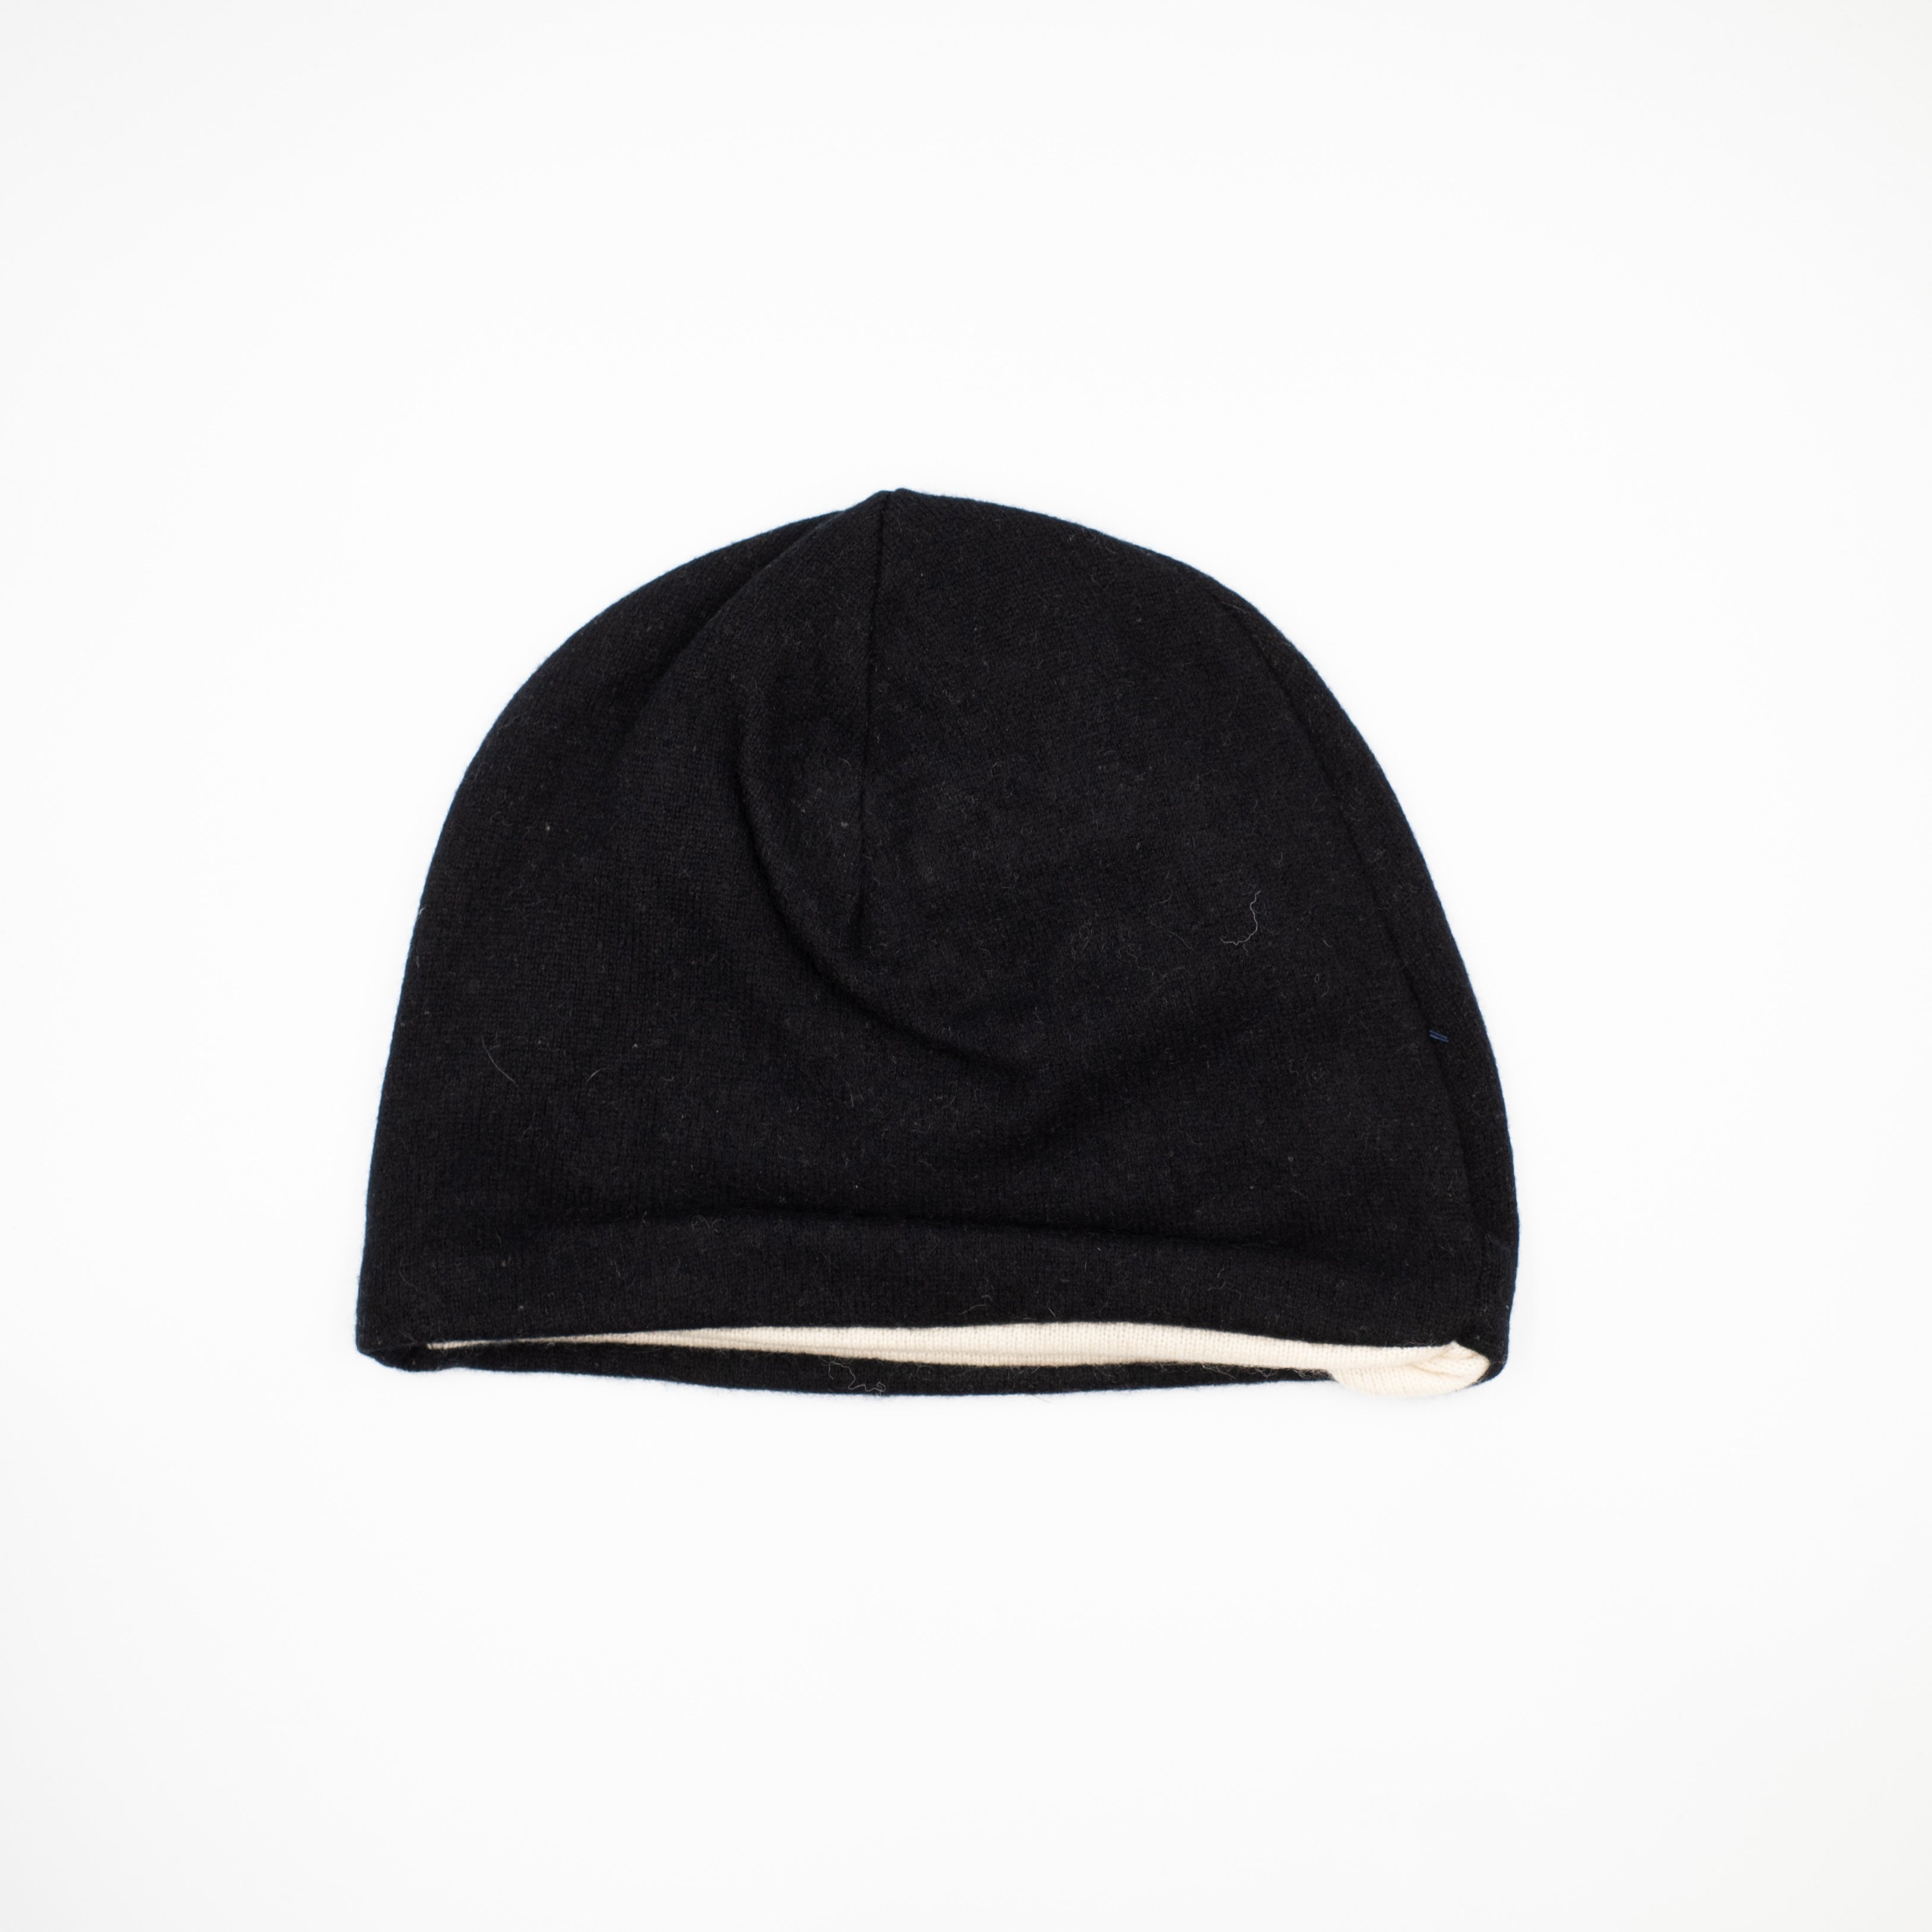 Black and Cream Cashmere Beanie Hat